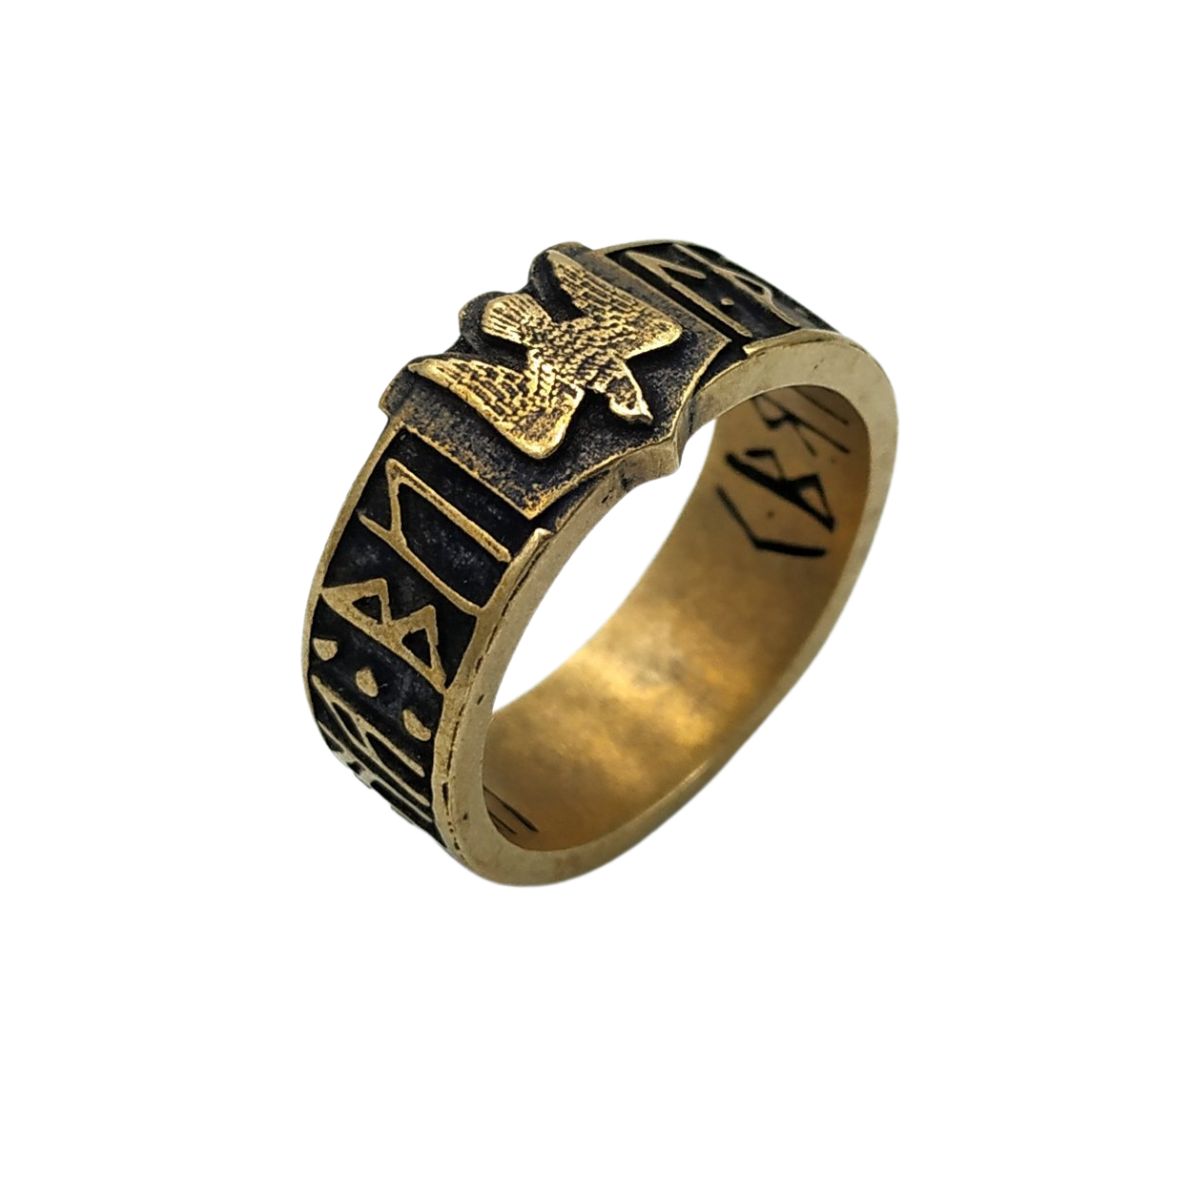 Slavic ethnic mens bronze ring “іду на Ви”